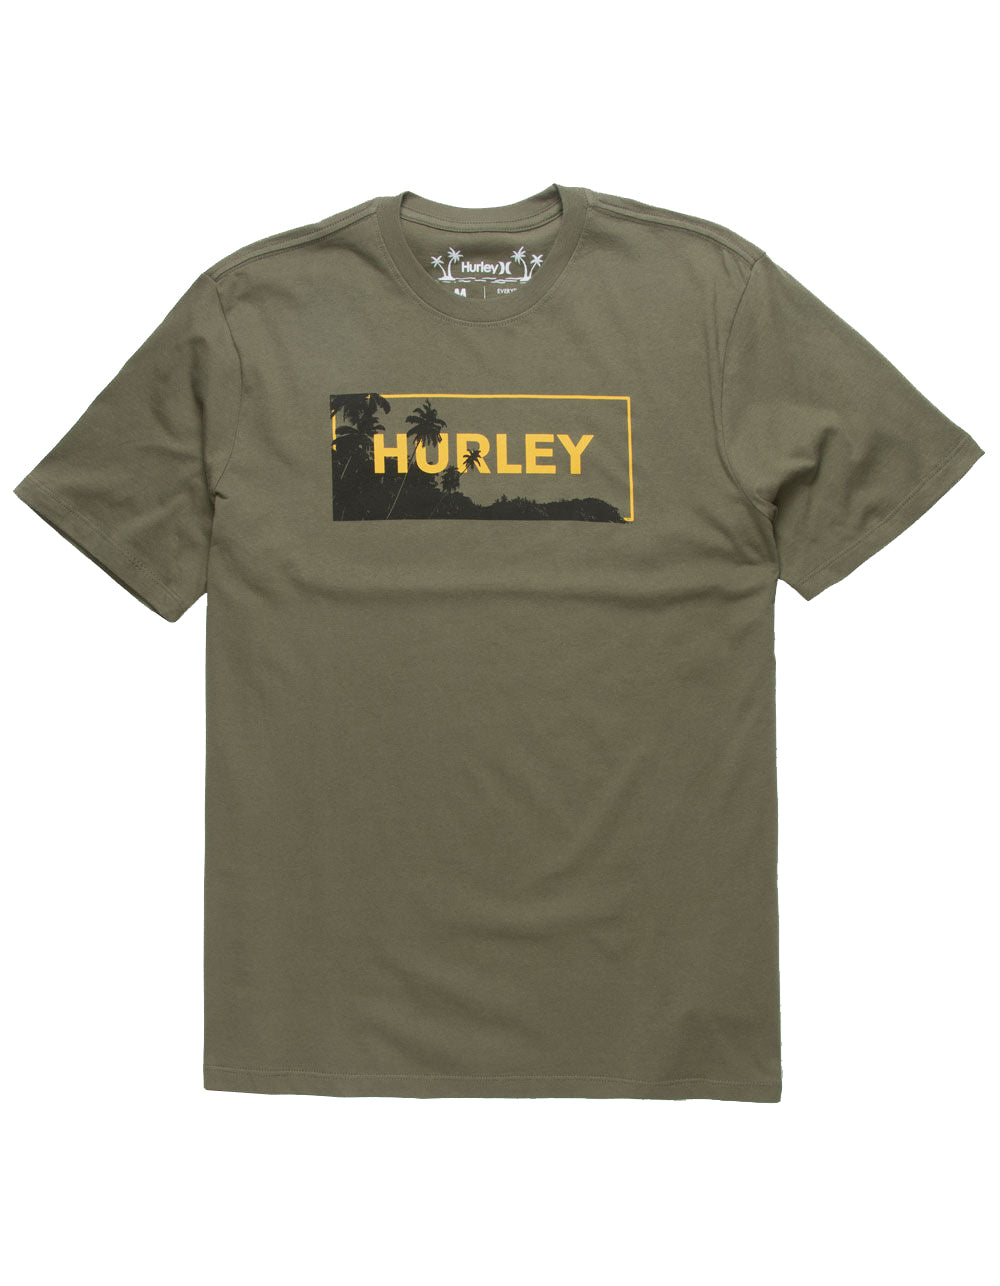 Hurley EVD Treez Steez SS tee H201-Olive S